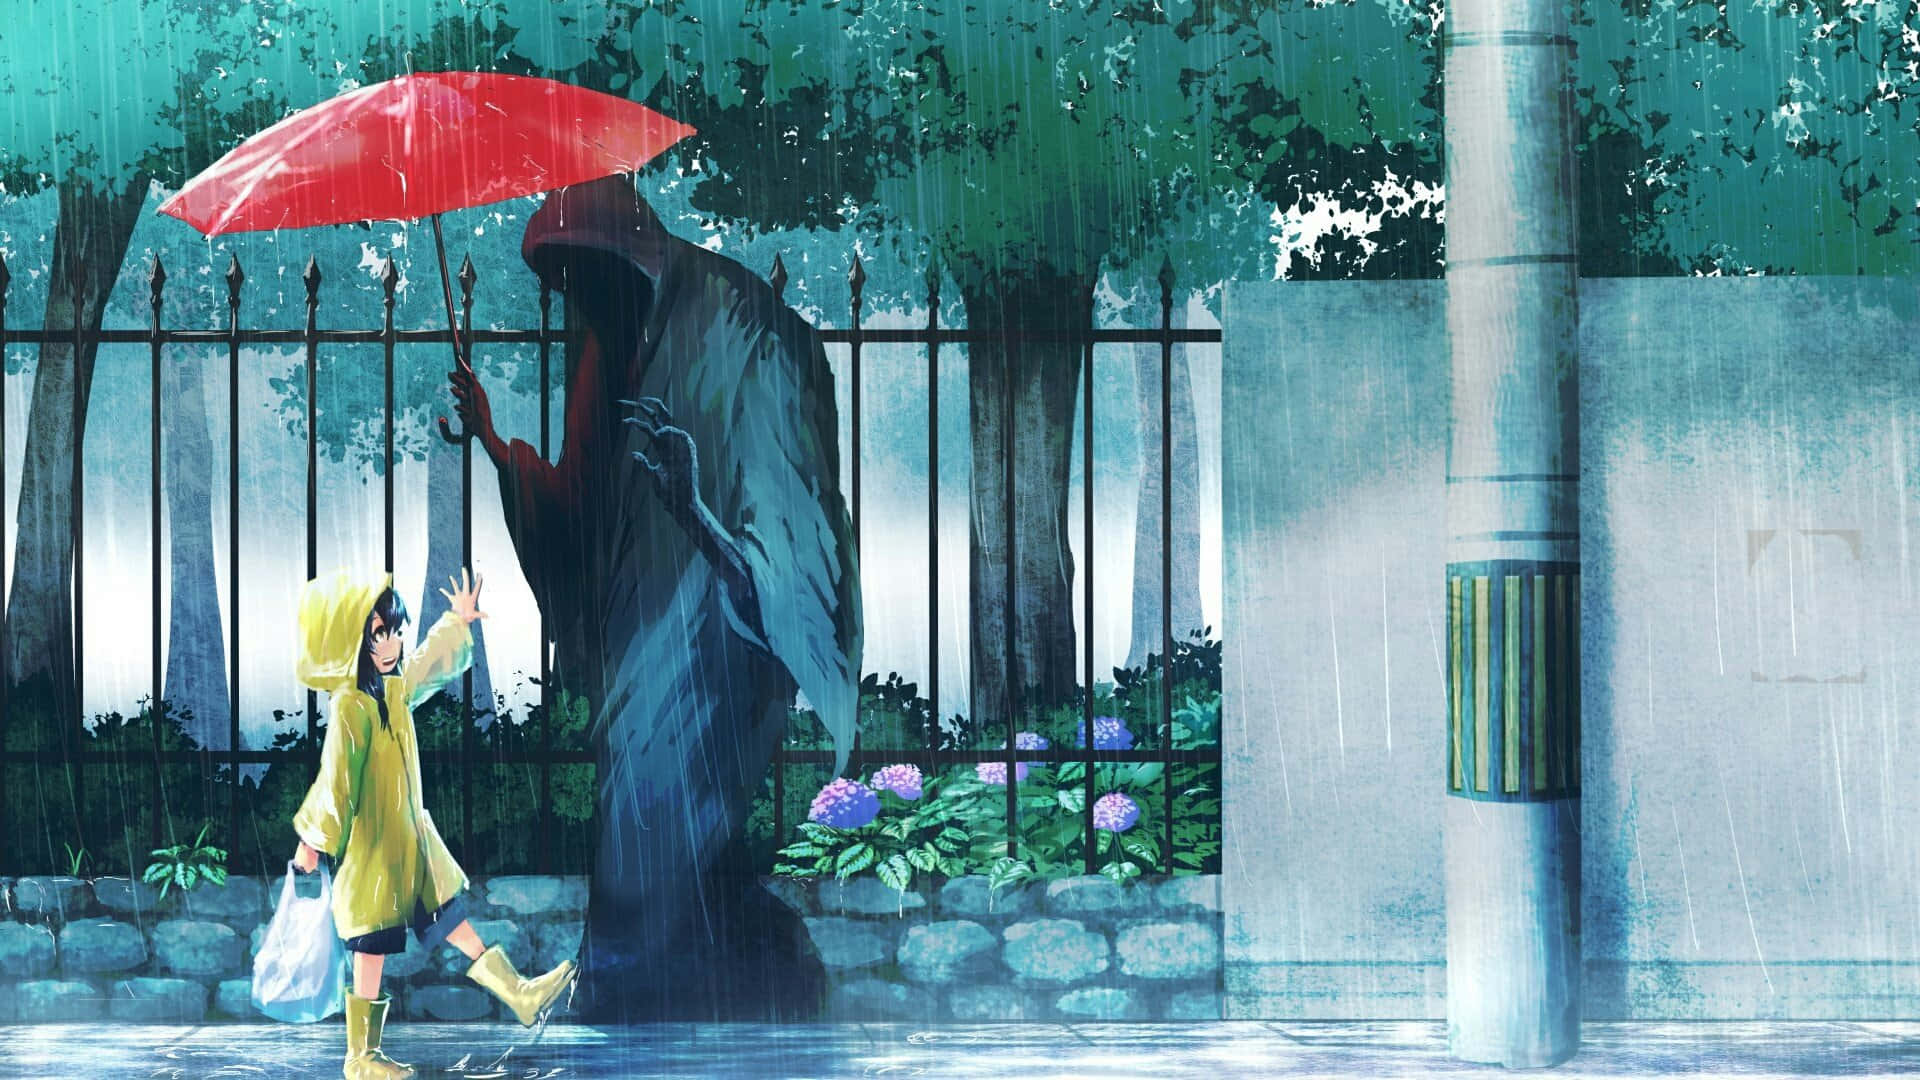 Child Meets Grim Reaper Umbrella Background